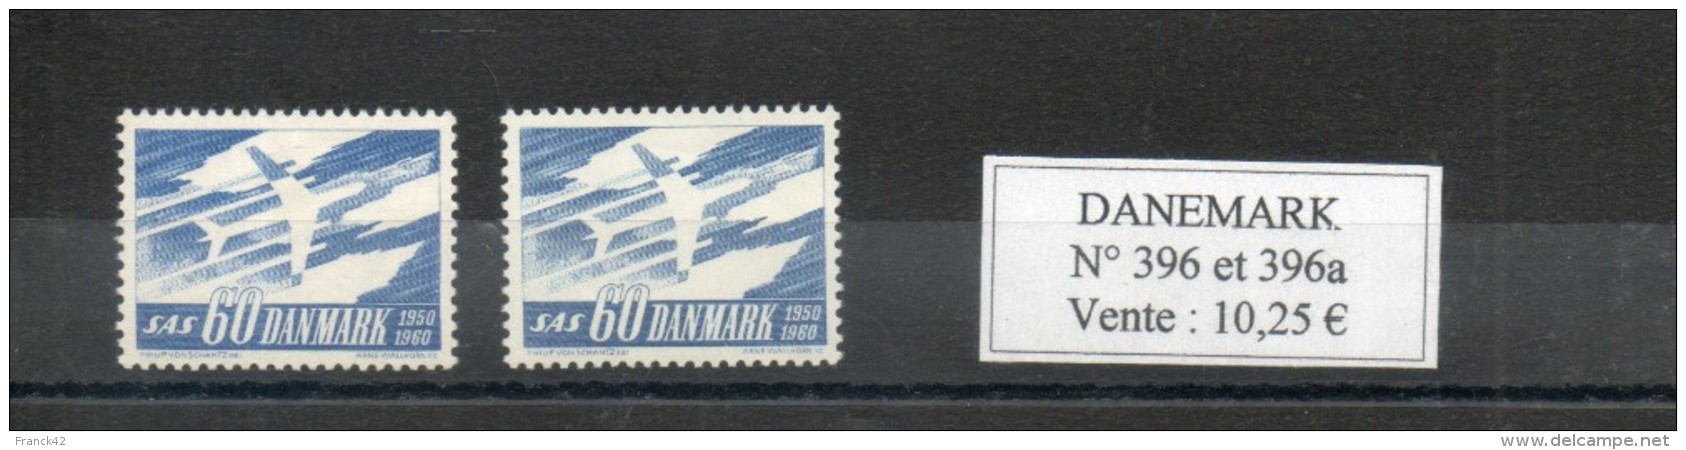 Danemark. SAS 1950-1960 - Neufs